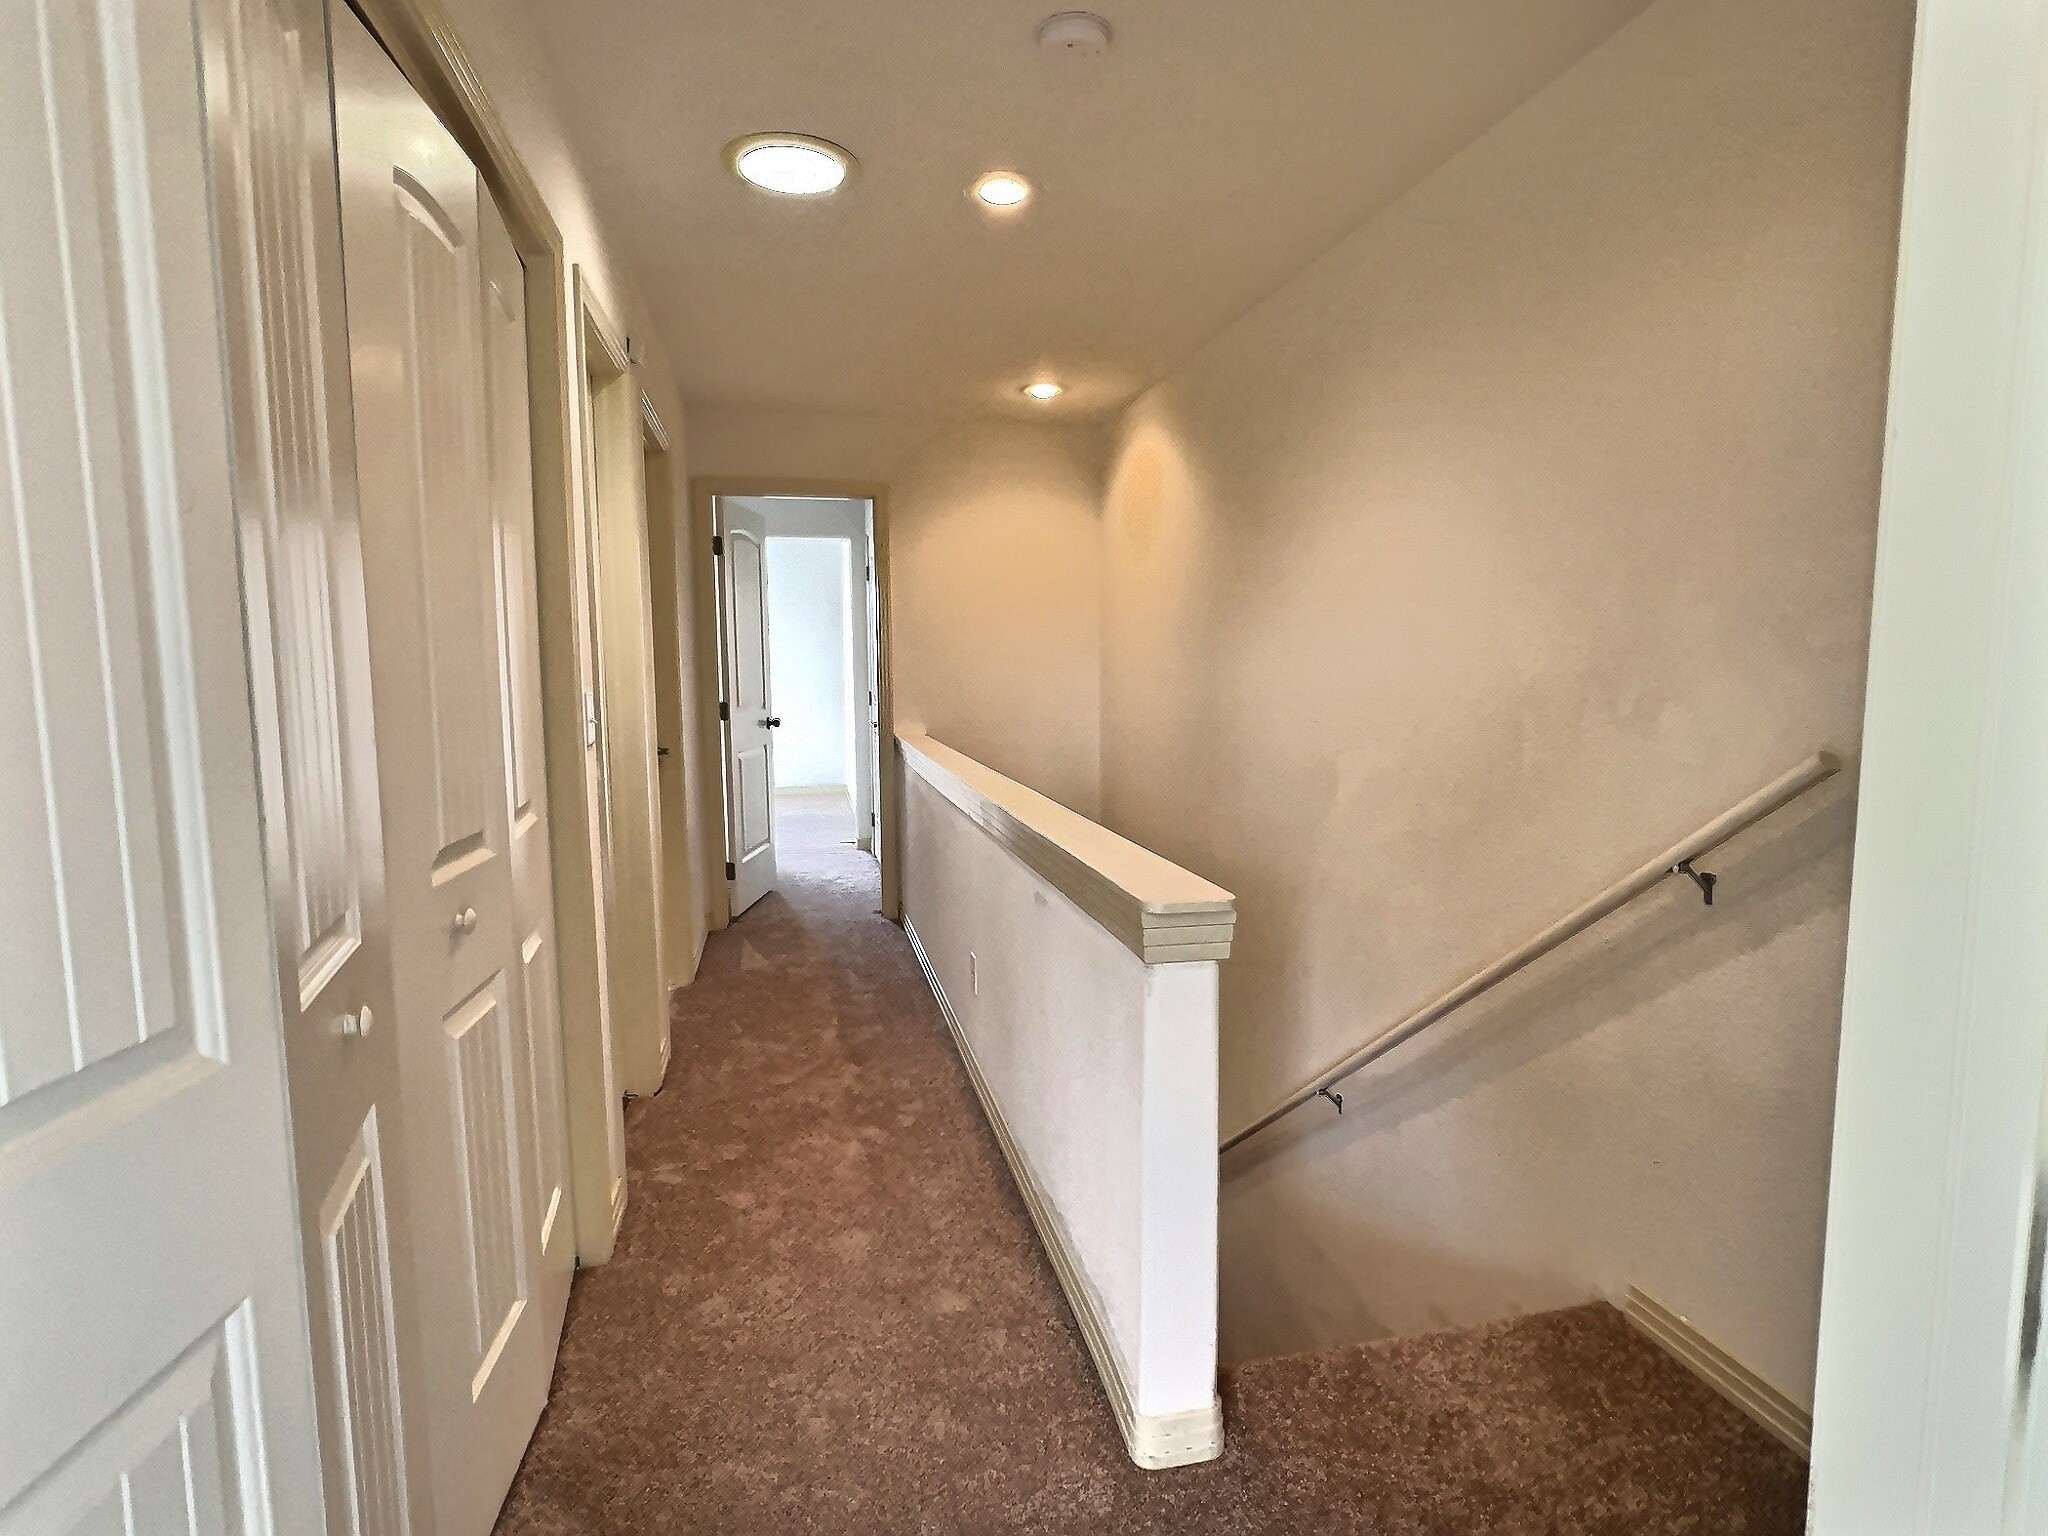 Upstairs hallway layout